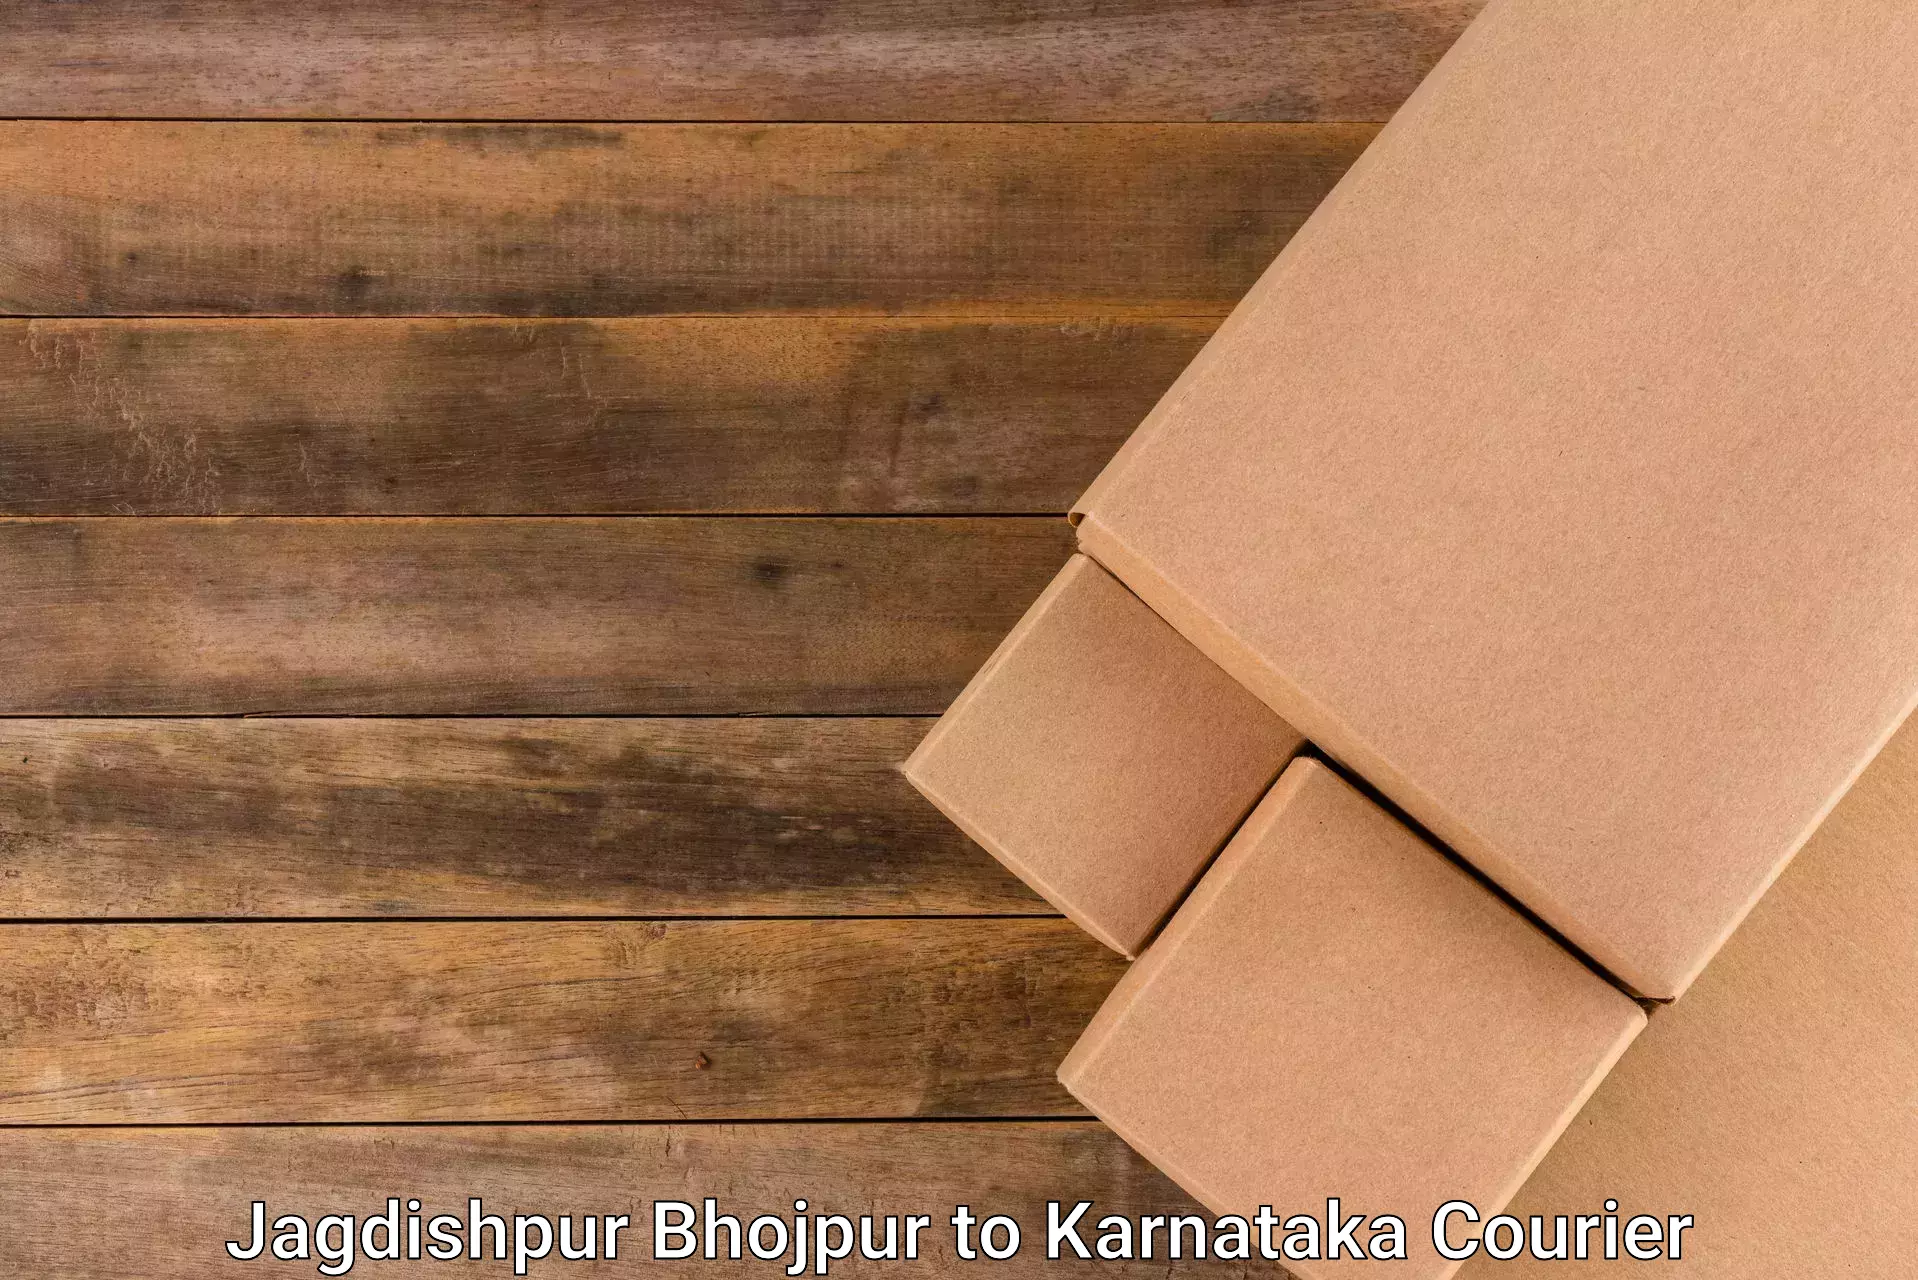 Advanced delivery network Jagdishpur Bhojpur to Srirangapatna